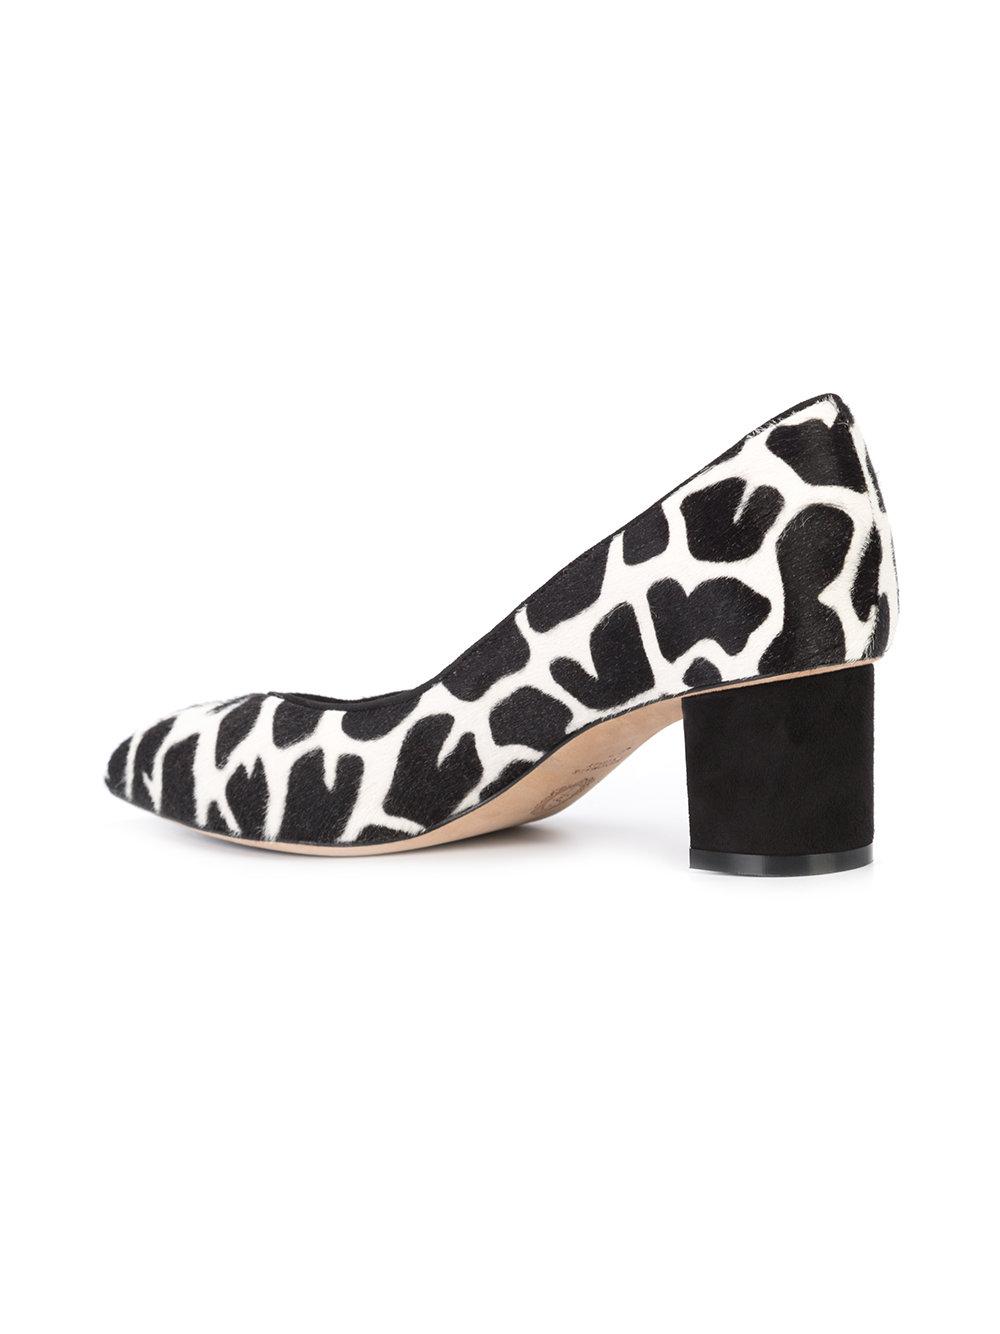 Sarah Flint Leather Giraffe Print Pump Shoes in Black Lyst